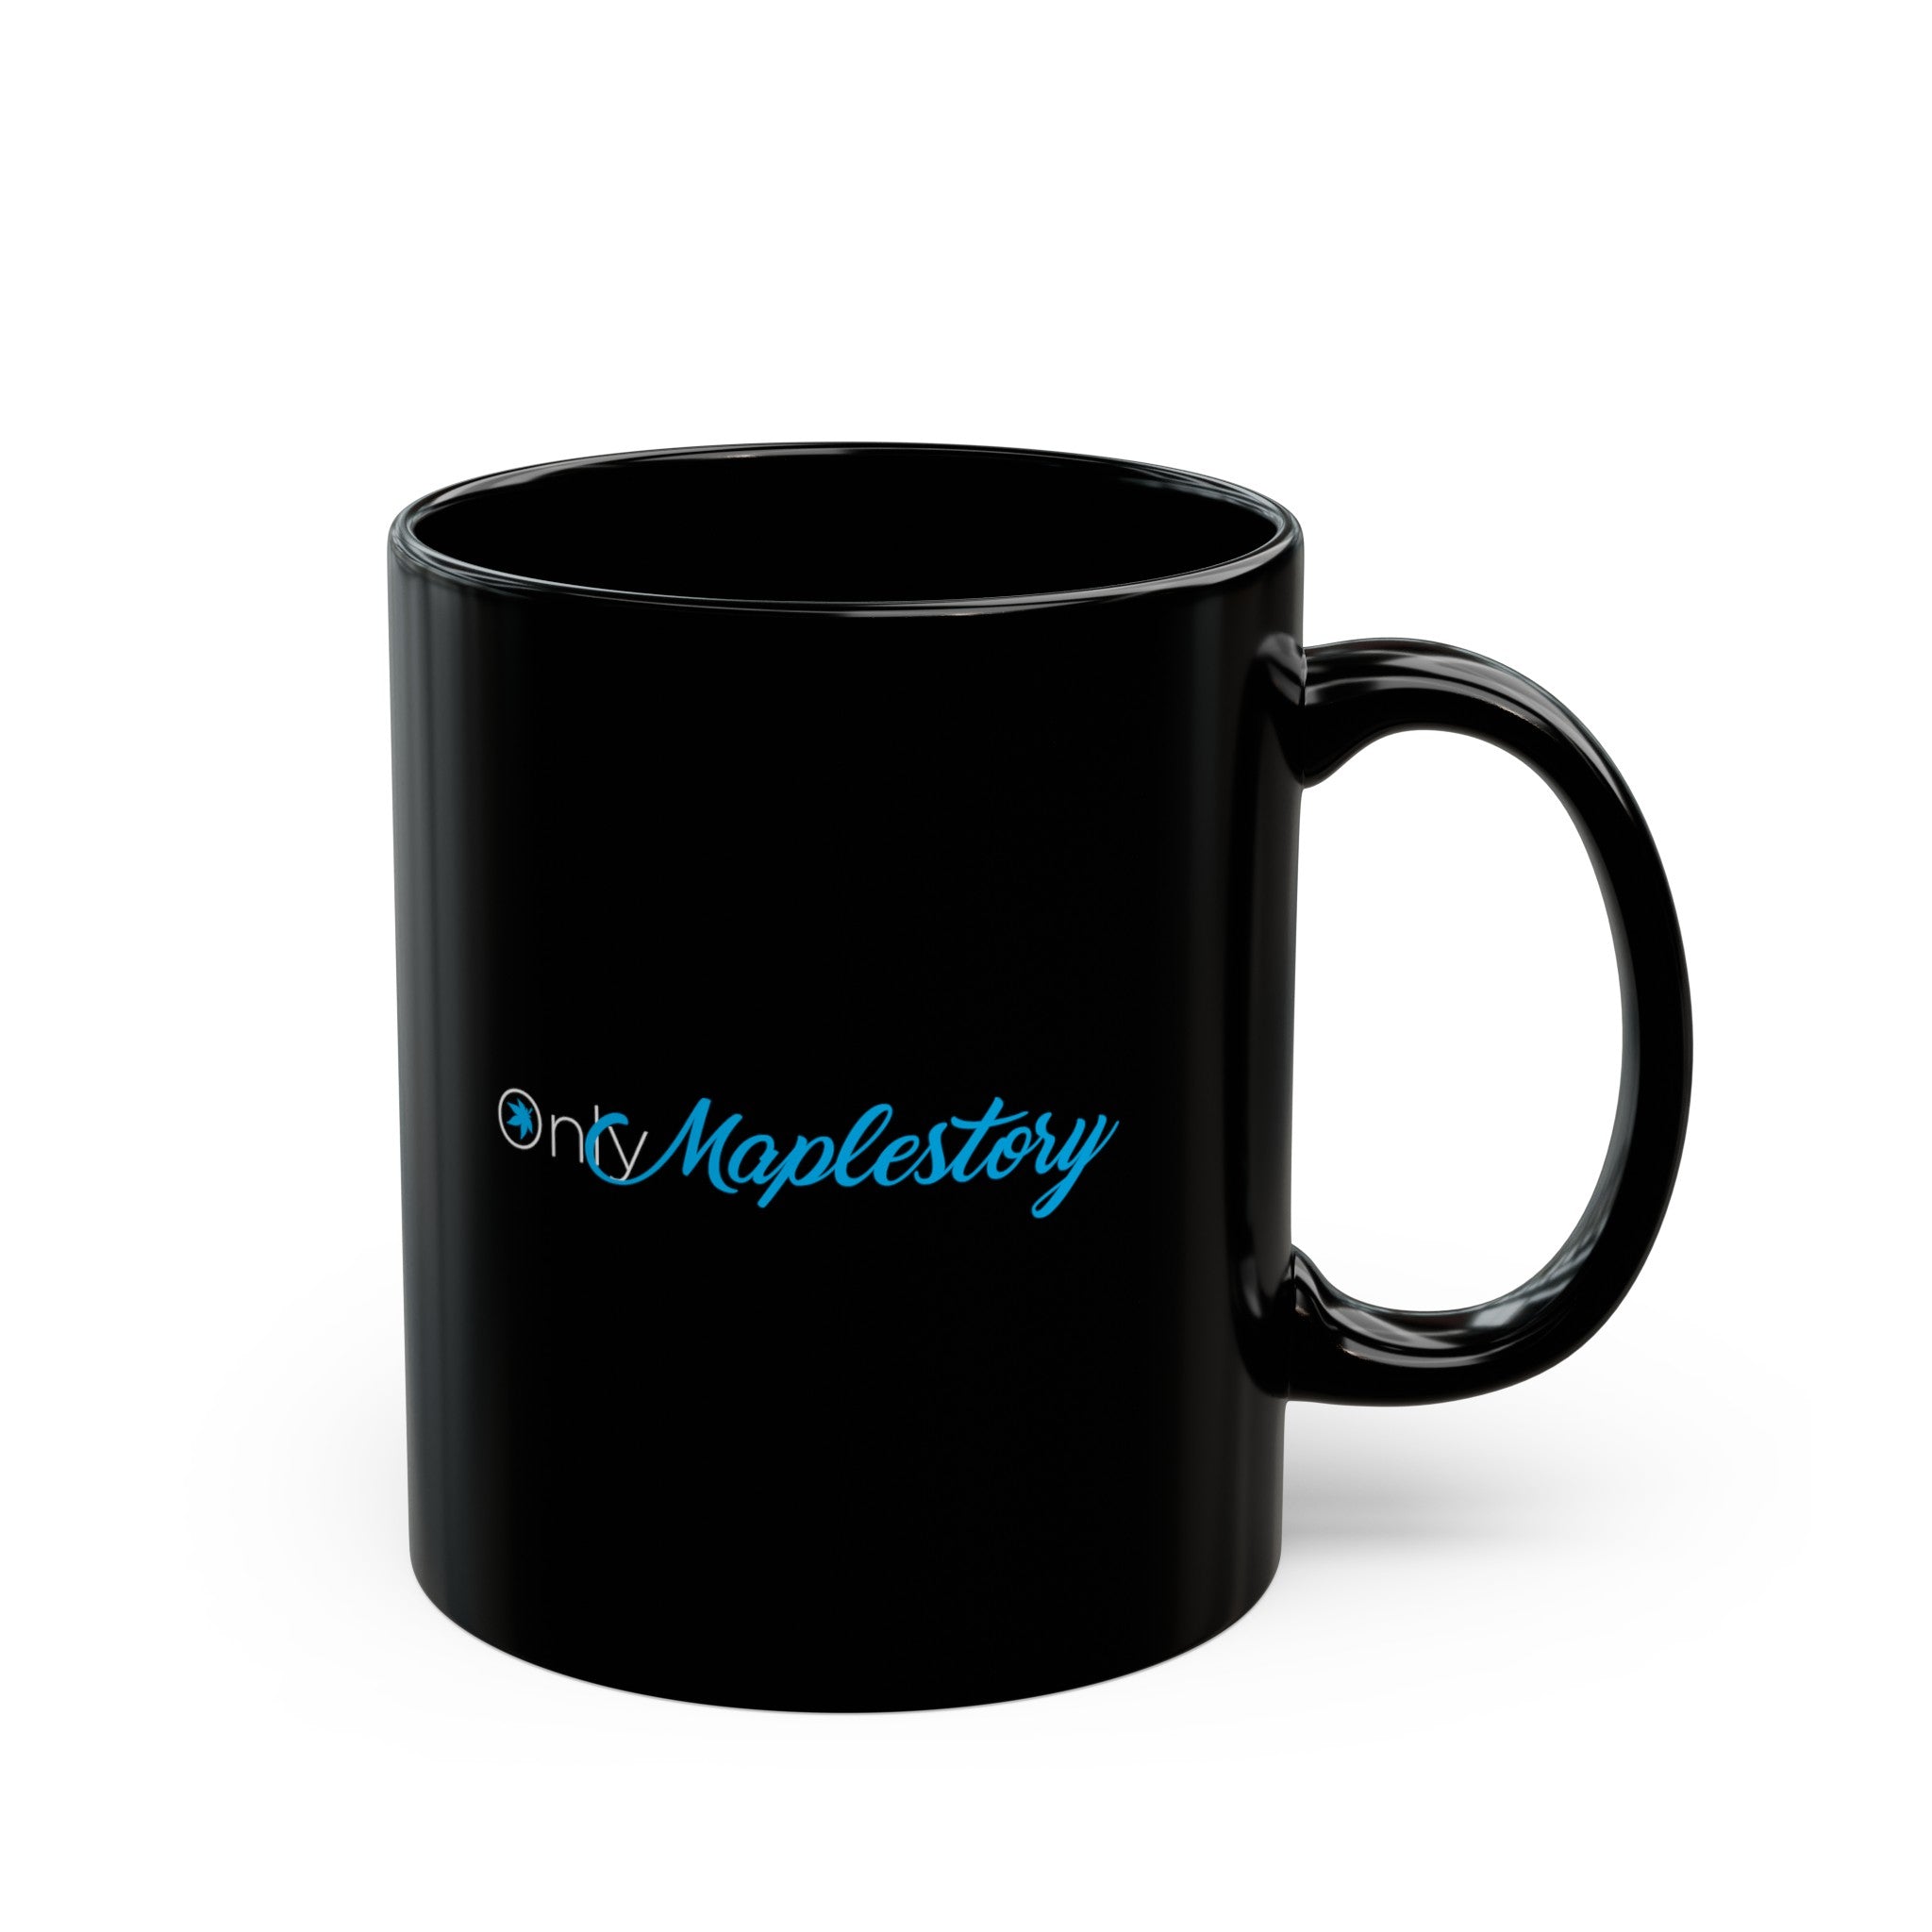 Only Maplestory Funny Black Mug (11oz, 15oz) Humor Humour Joke Comedy Fans maple mapler maplesea mapleglobal cup gift mug birthday